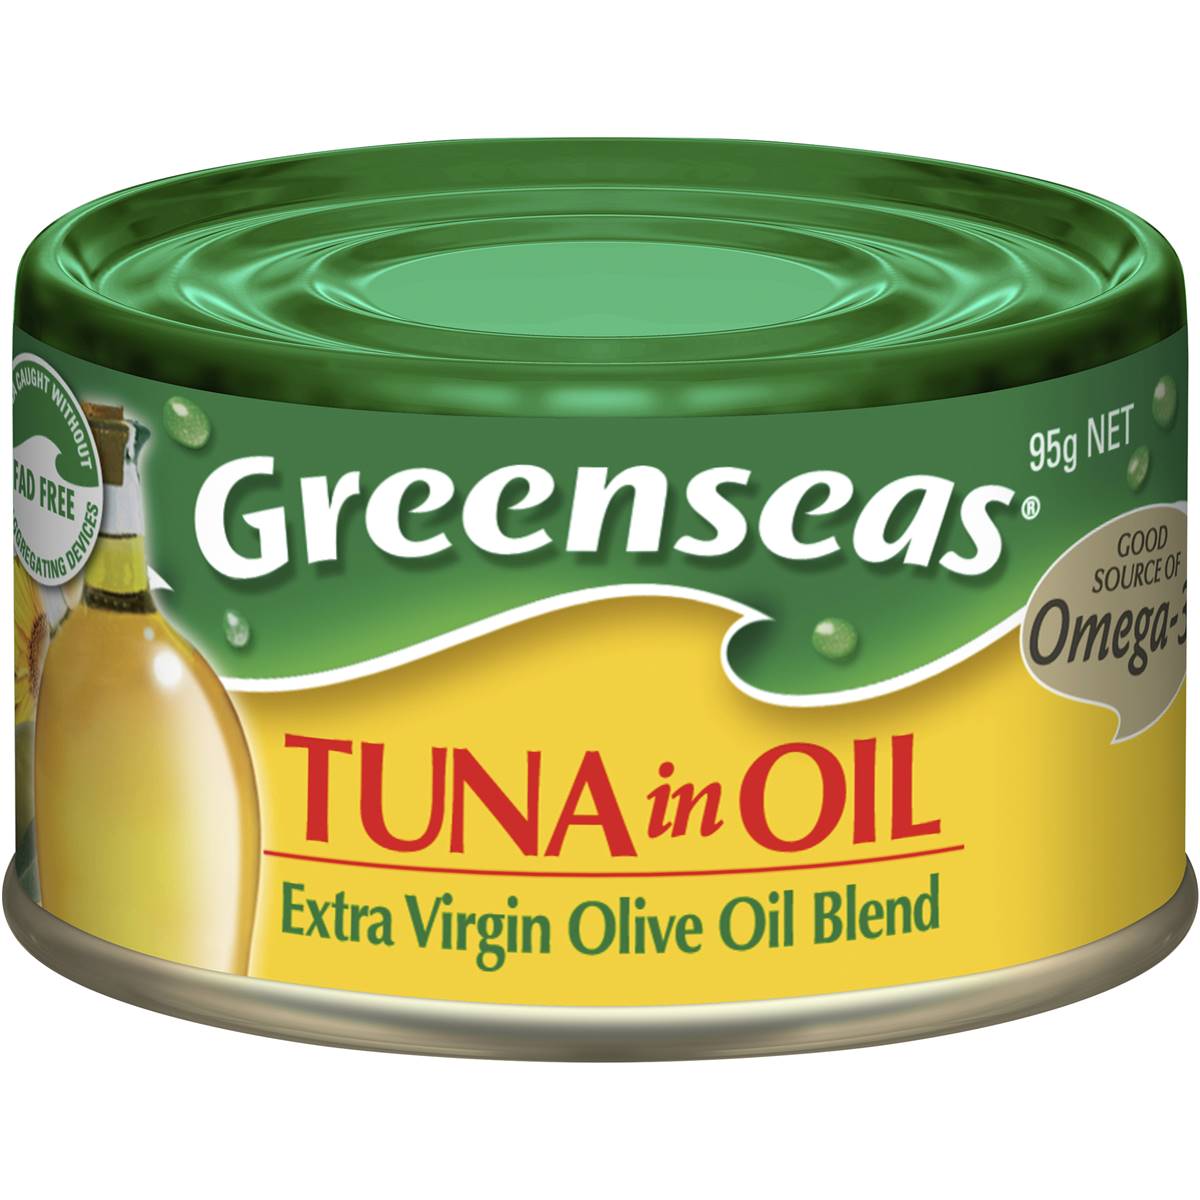 Greenseas Tuna in Oil 95g